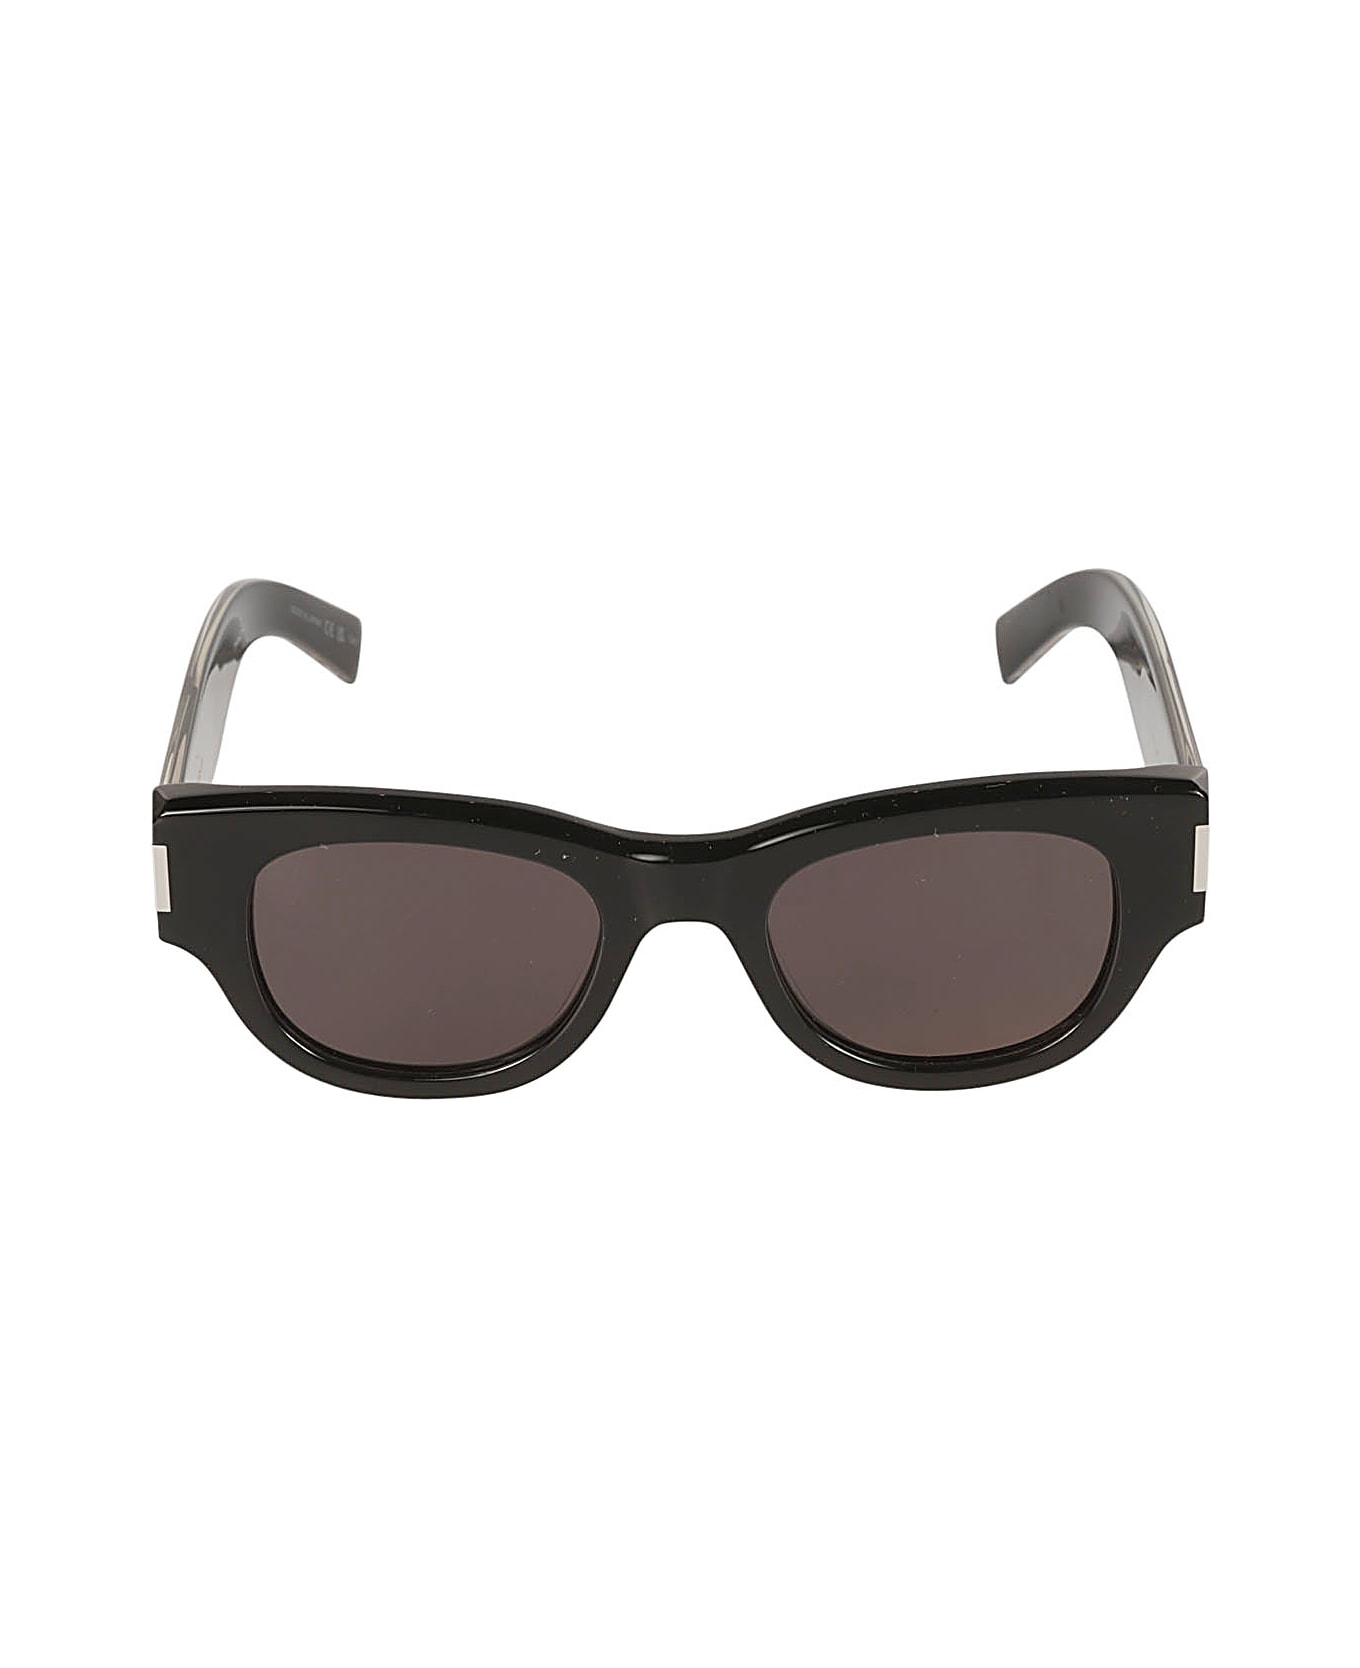 Saint Laurent Eyewear Round Frame Sunglasses - Black/Crystal/Grey